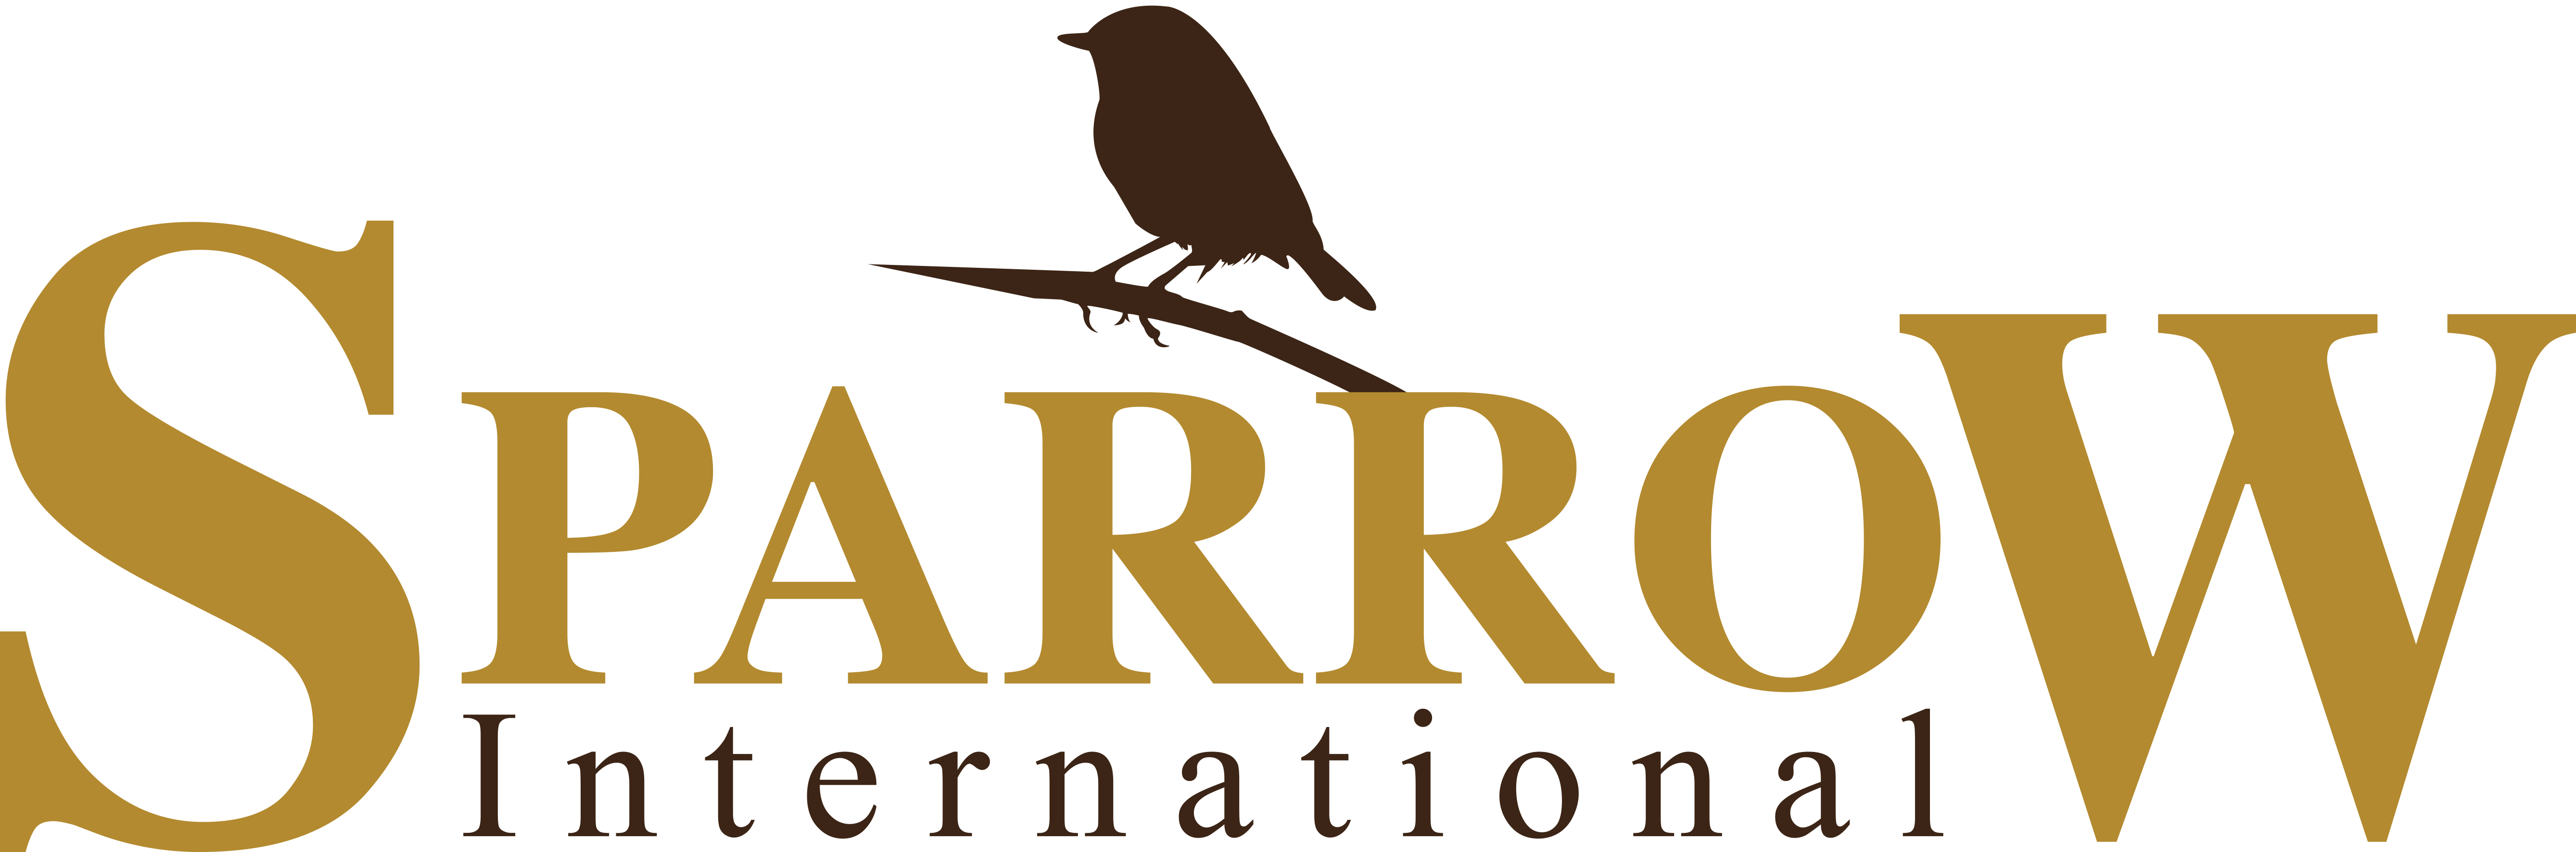 All brand logos footer image - Sparrow International coffee machine supplier in dubai